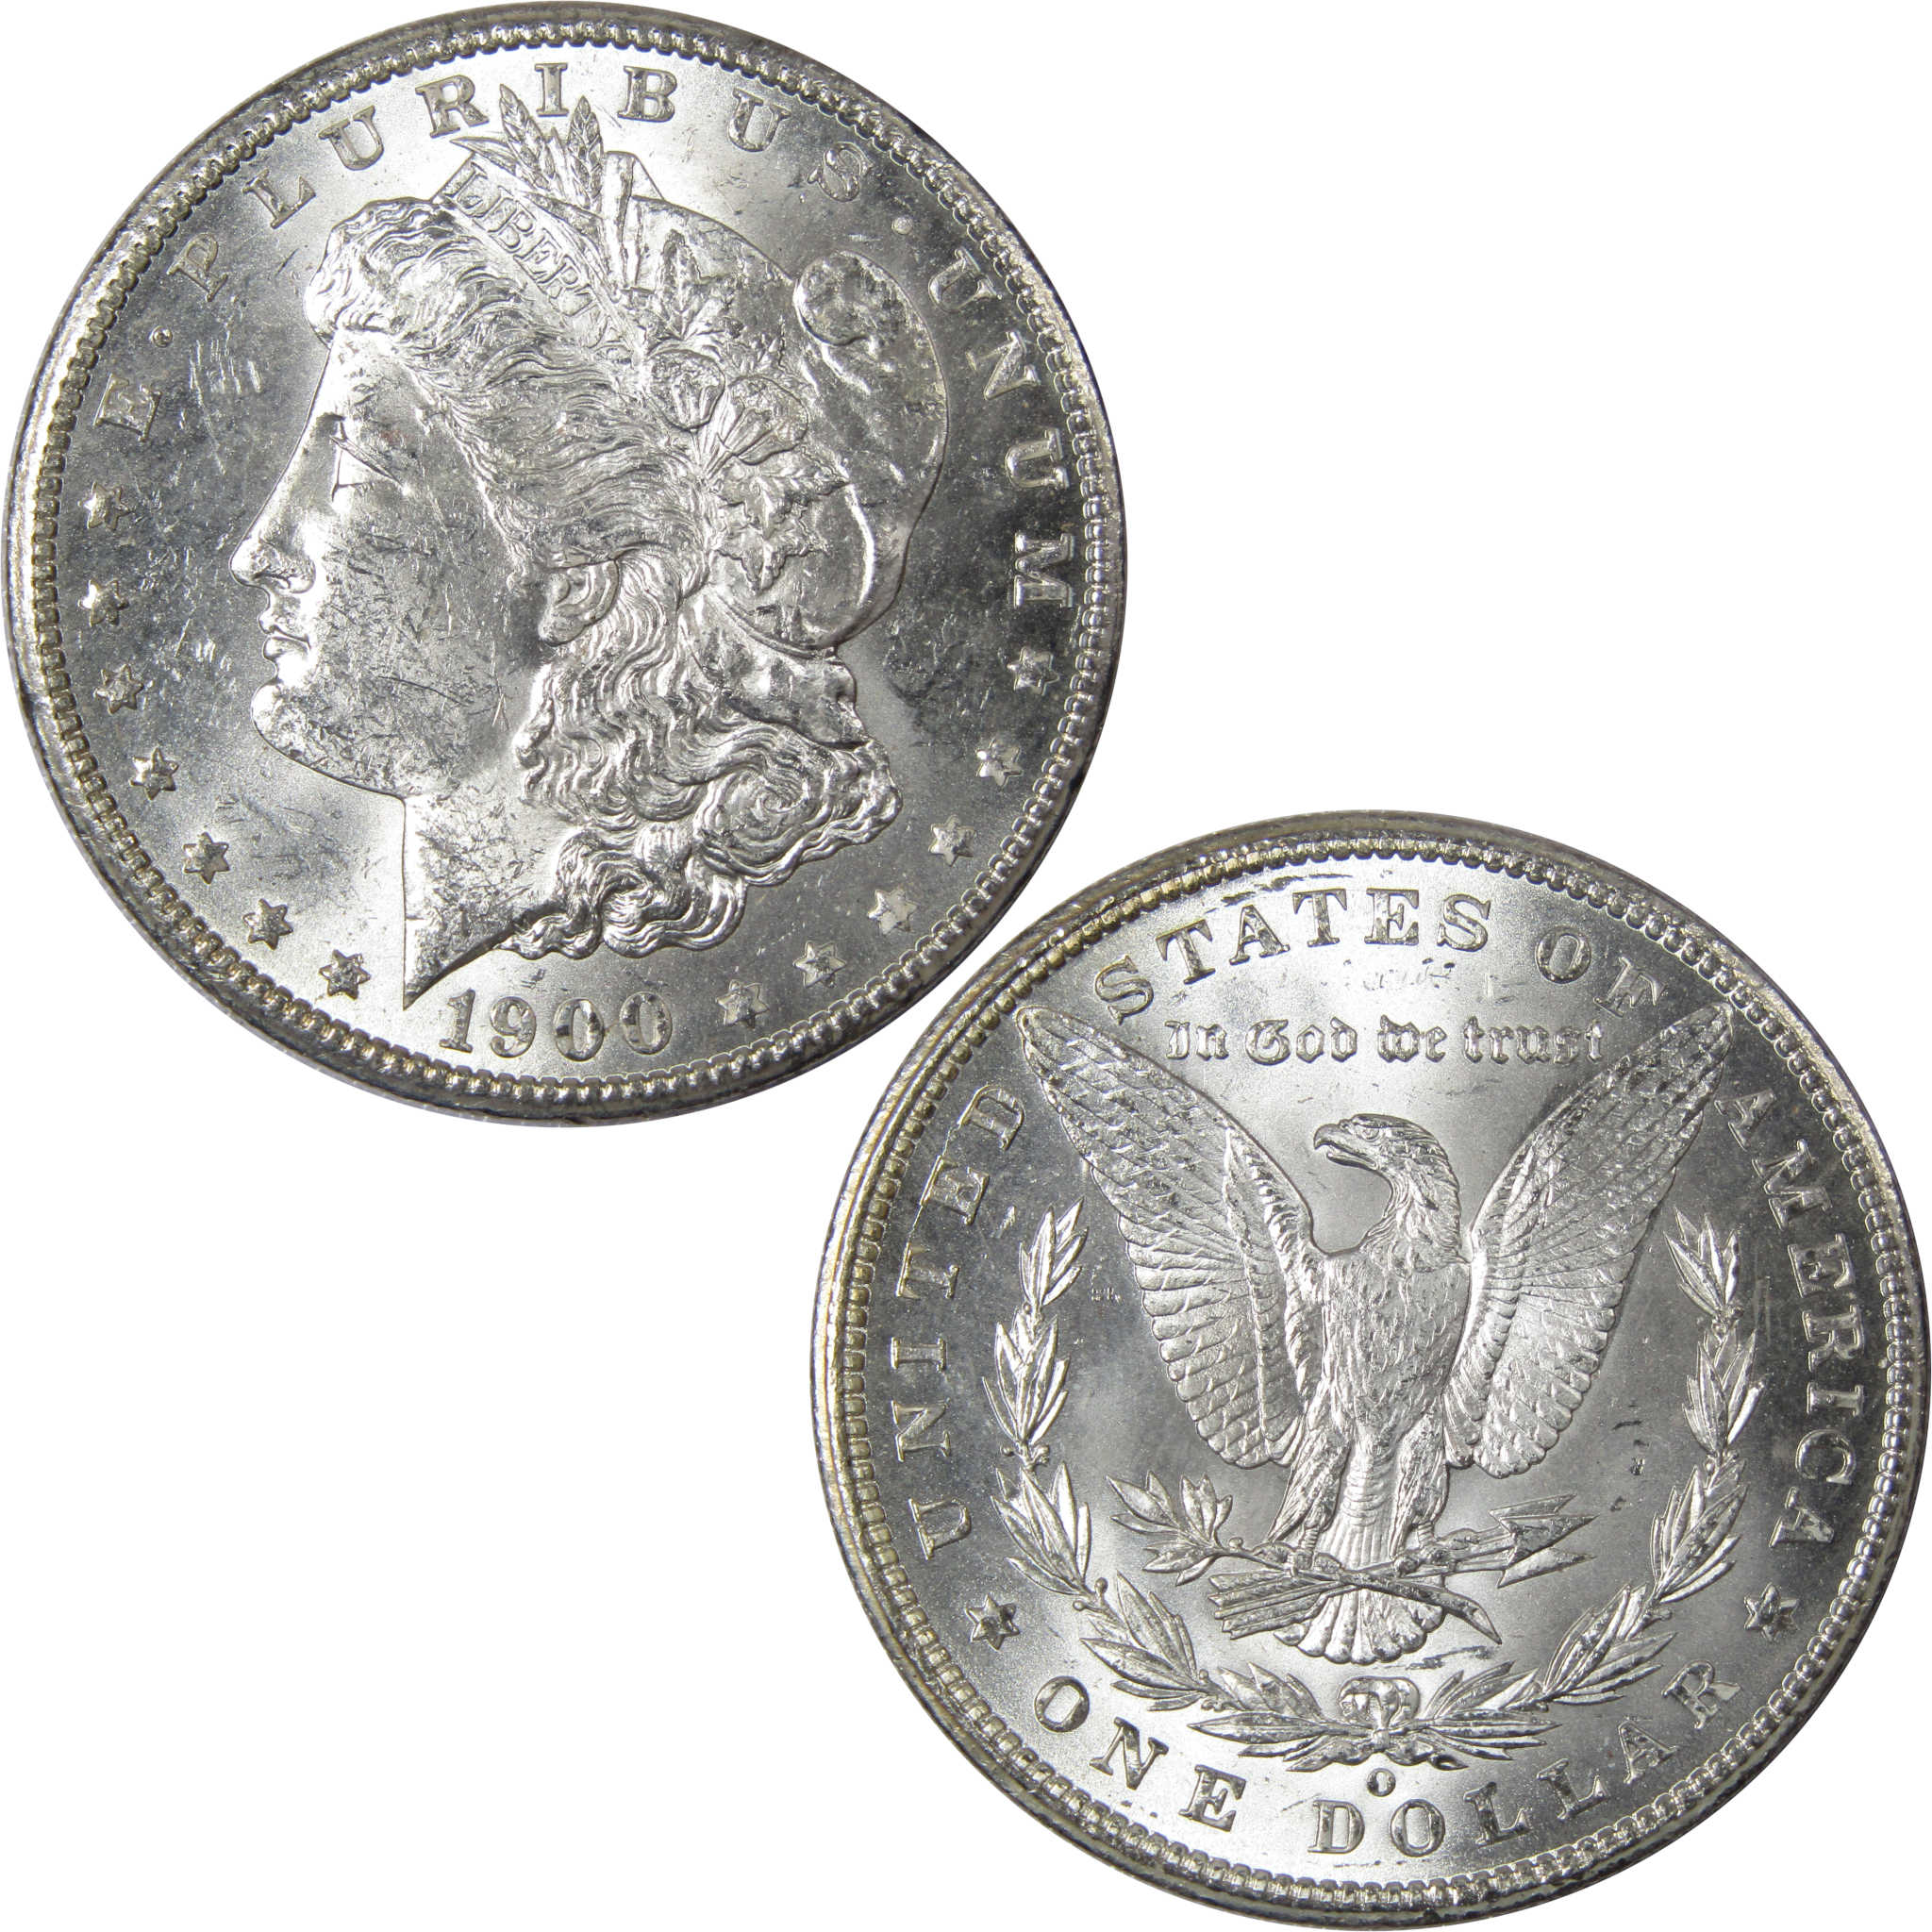 1900 O Morgan Dollar BU Uncirculated Mint State 90% Silver SKU:IPC9735 - Morgan coin - Morgan silver dollar - Morgan silver dollar for sale - Profile Coins &amp; Collectibles